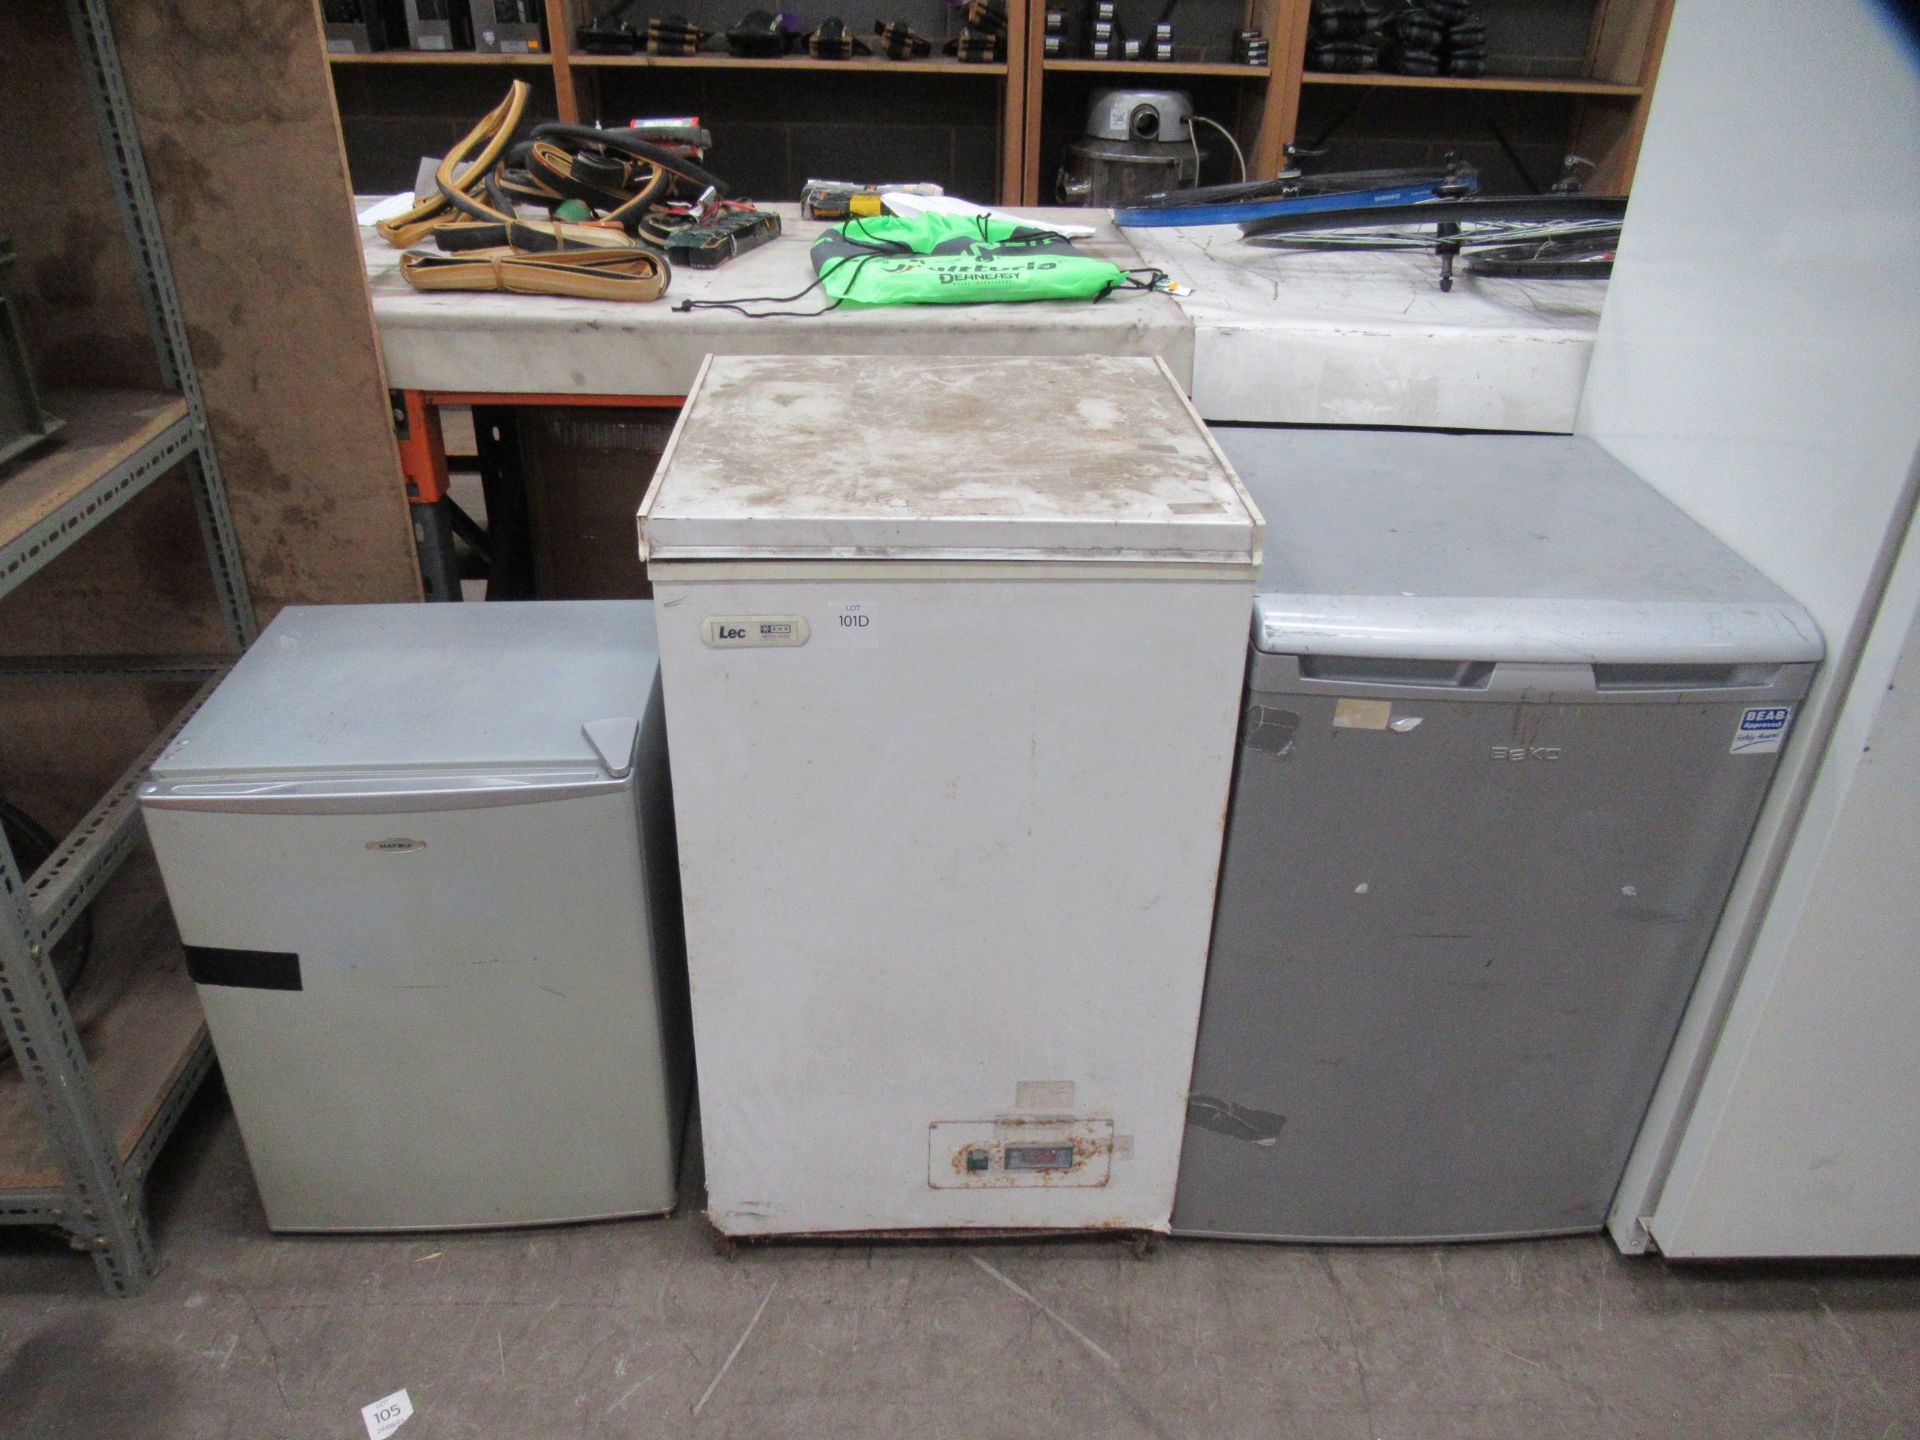 A Beko fridge, a matsui counter top fridge and an LEC chest freezer